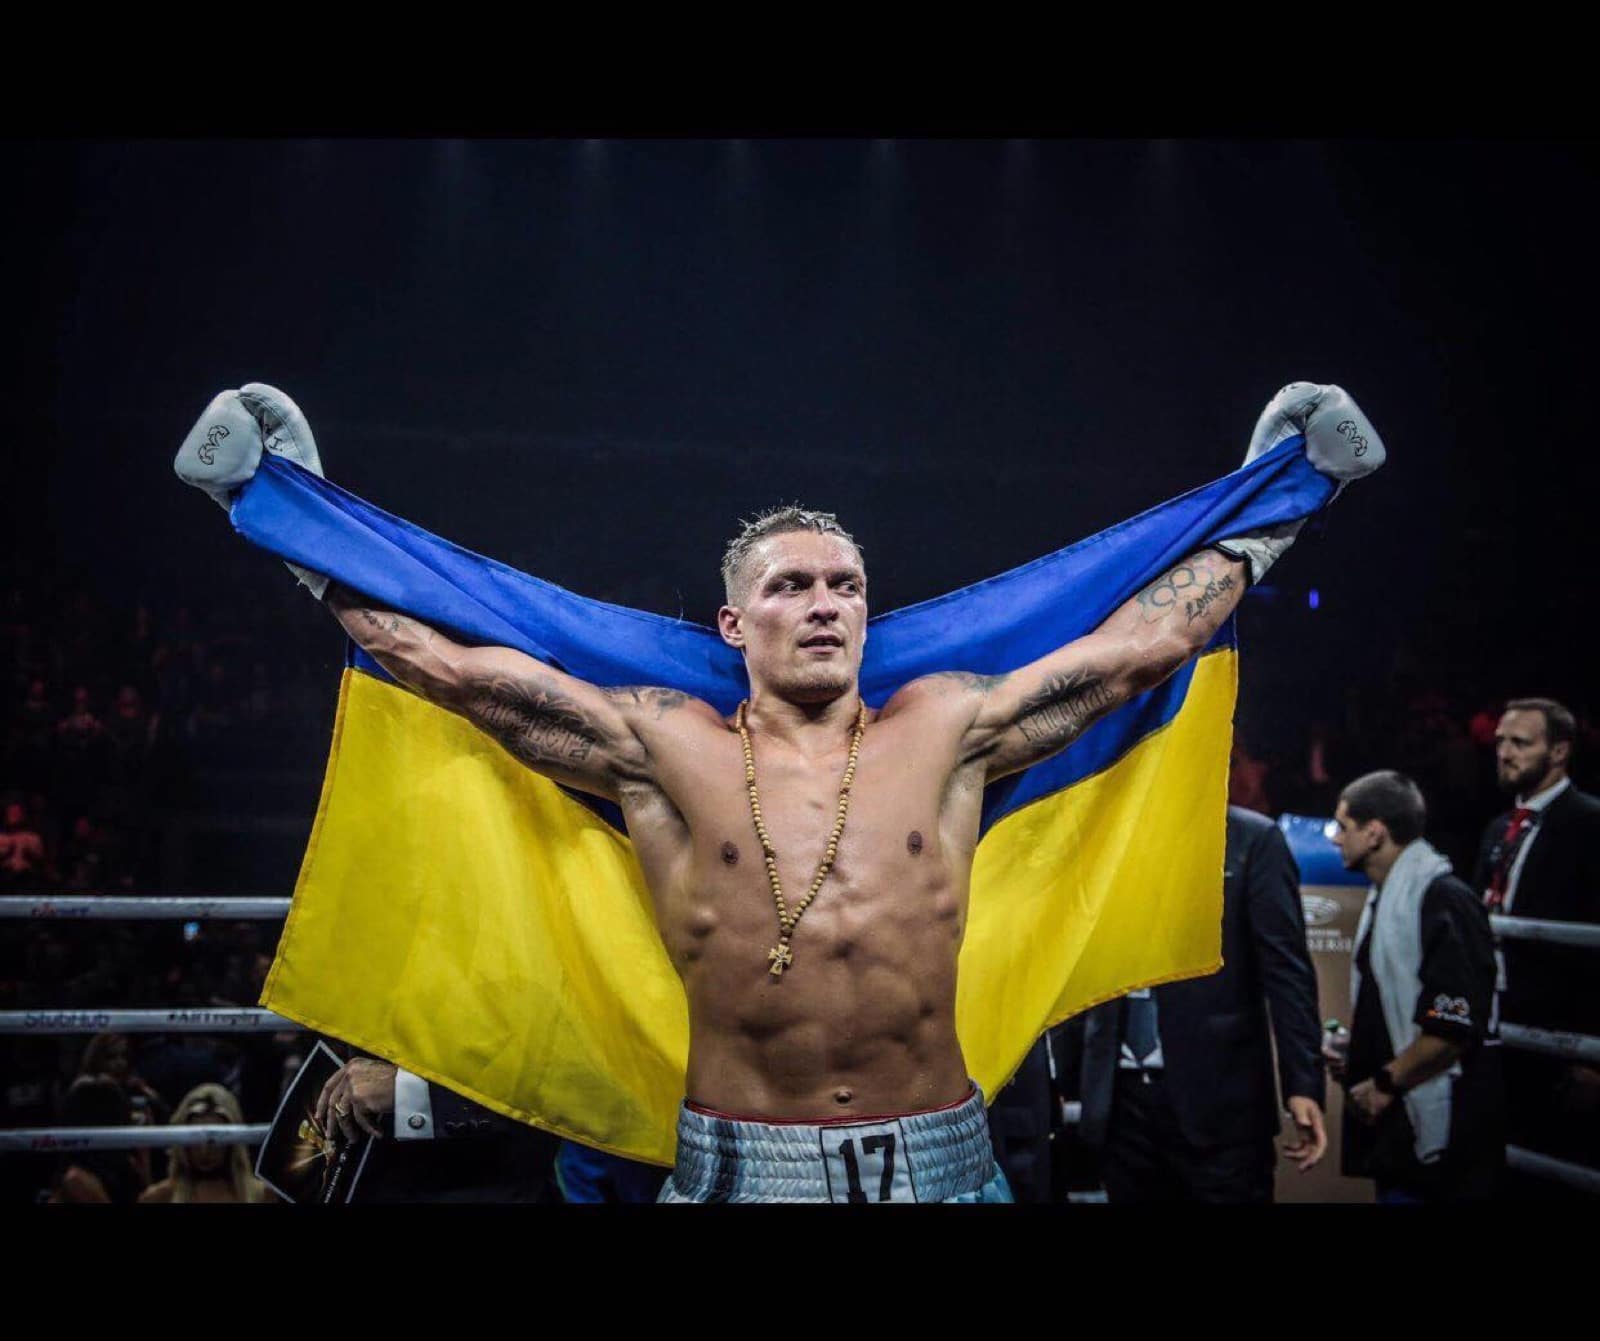 Alexander Usyk boxing image / photo